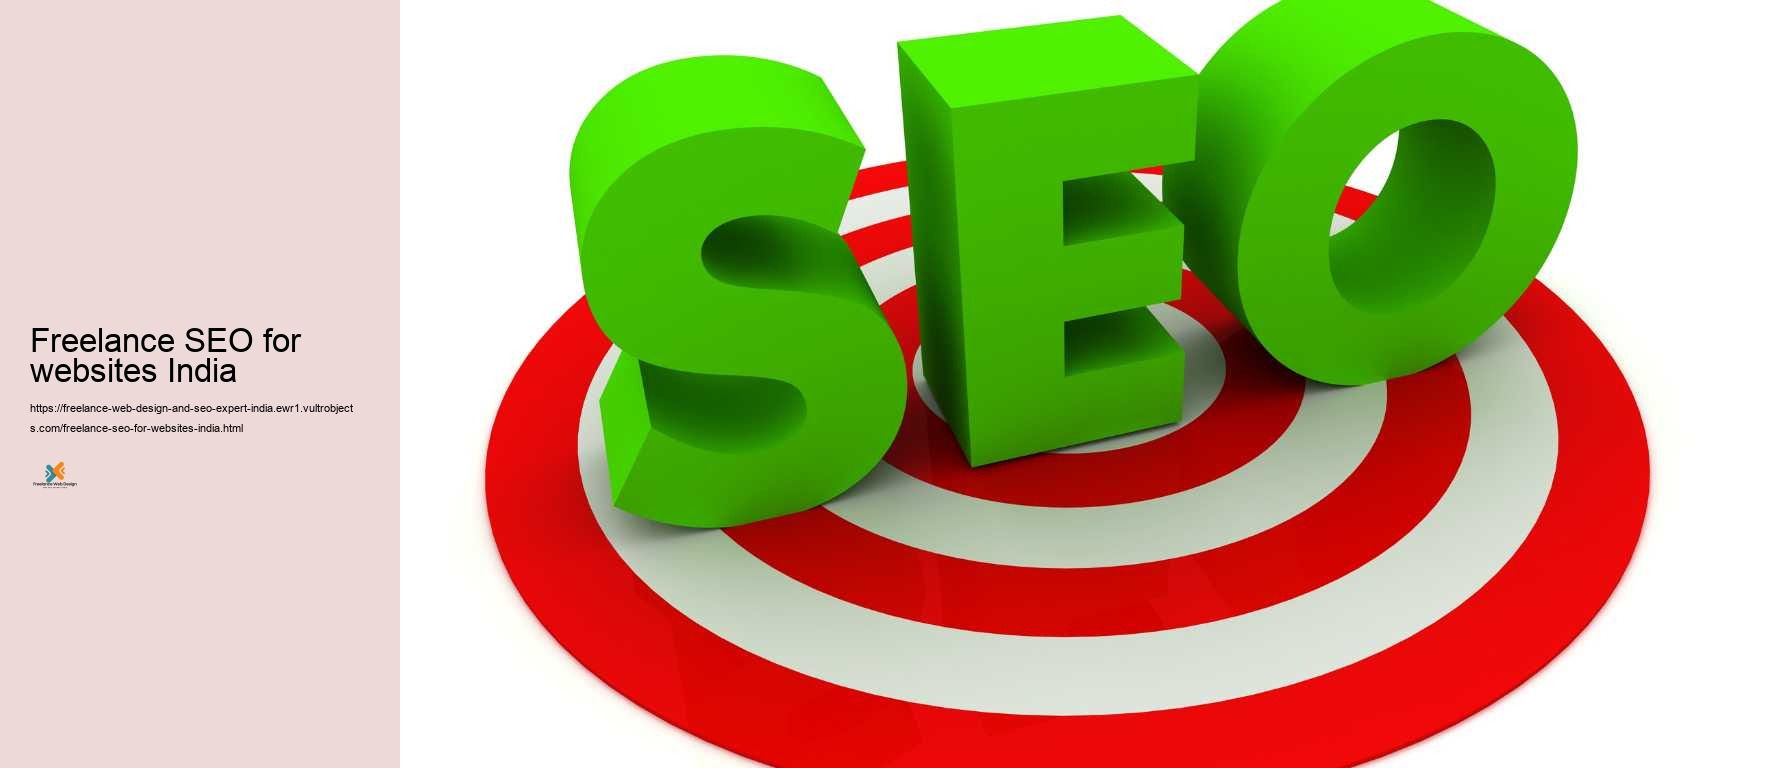 Freelance SEO for websites India